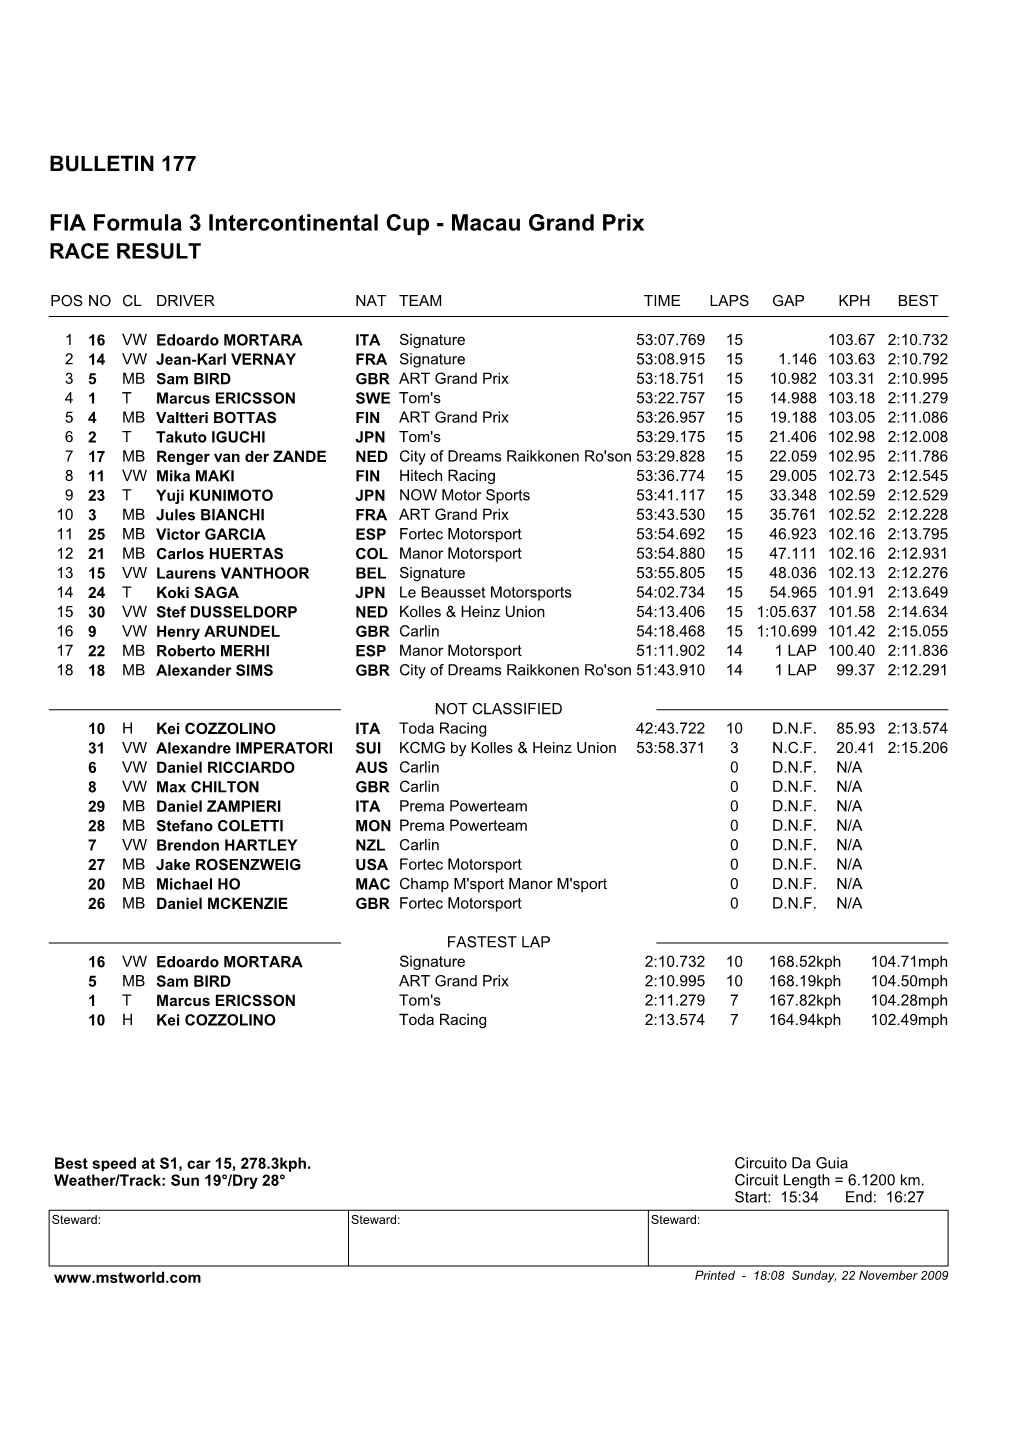 Macau Grand Prix RACE RESULT